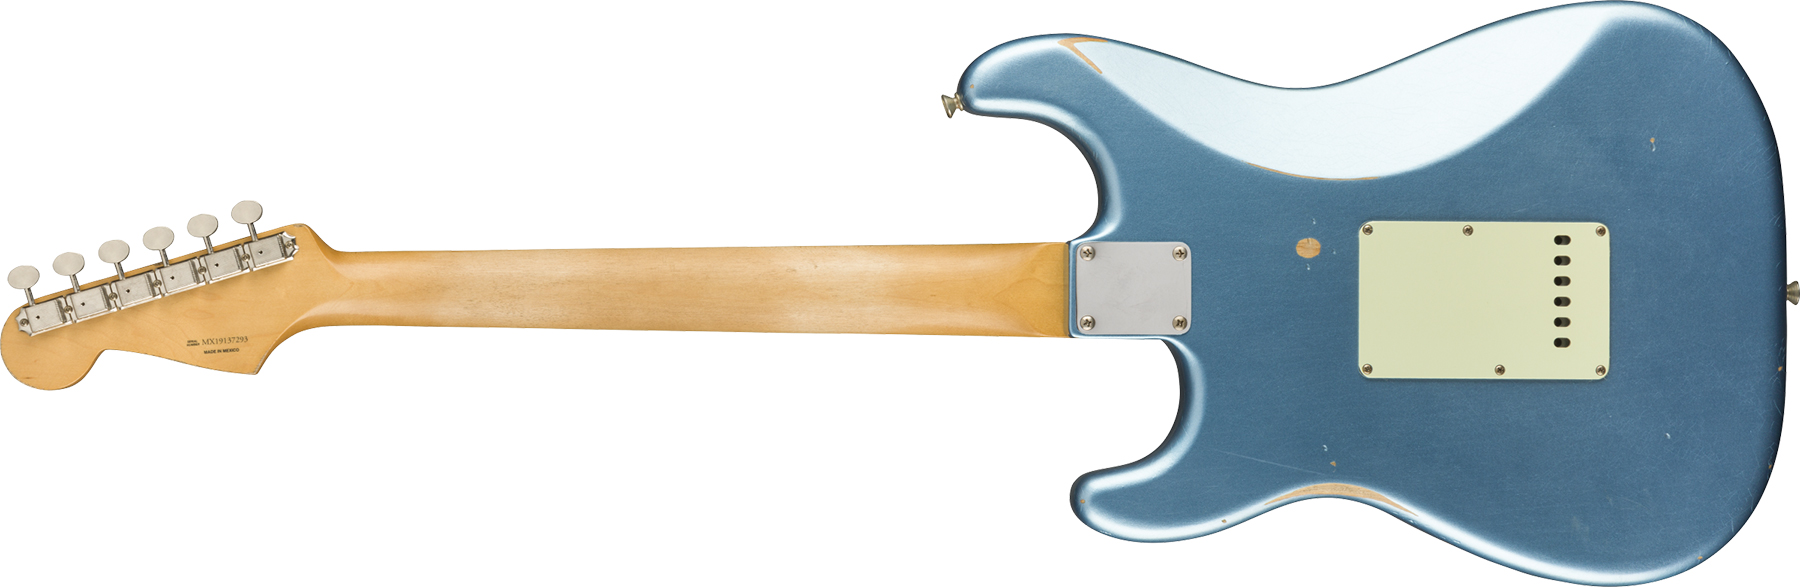 Fender Strat 60s Road Worn Mex Pf - Lake Placid Blue - E-Gitarre in Str-Form - Variation 1